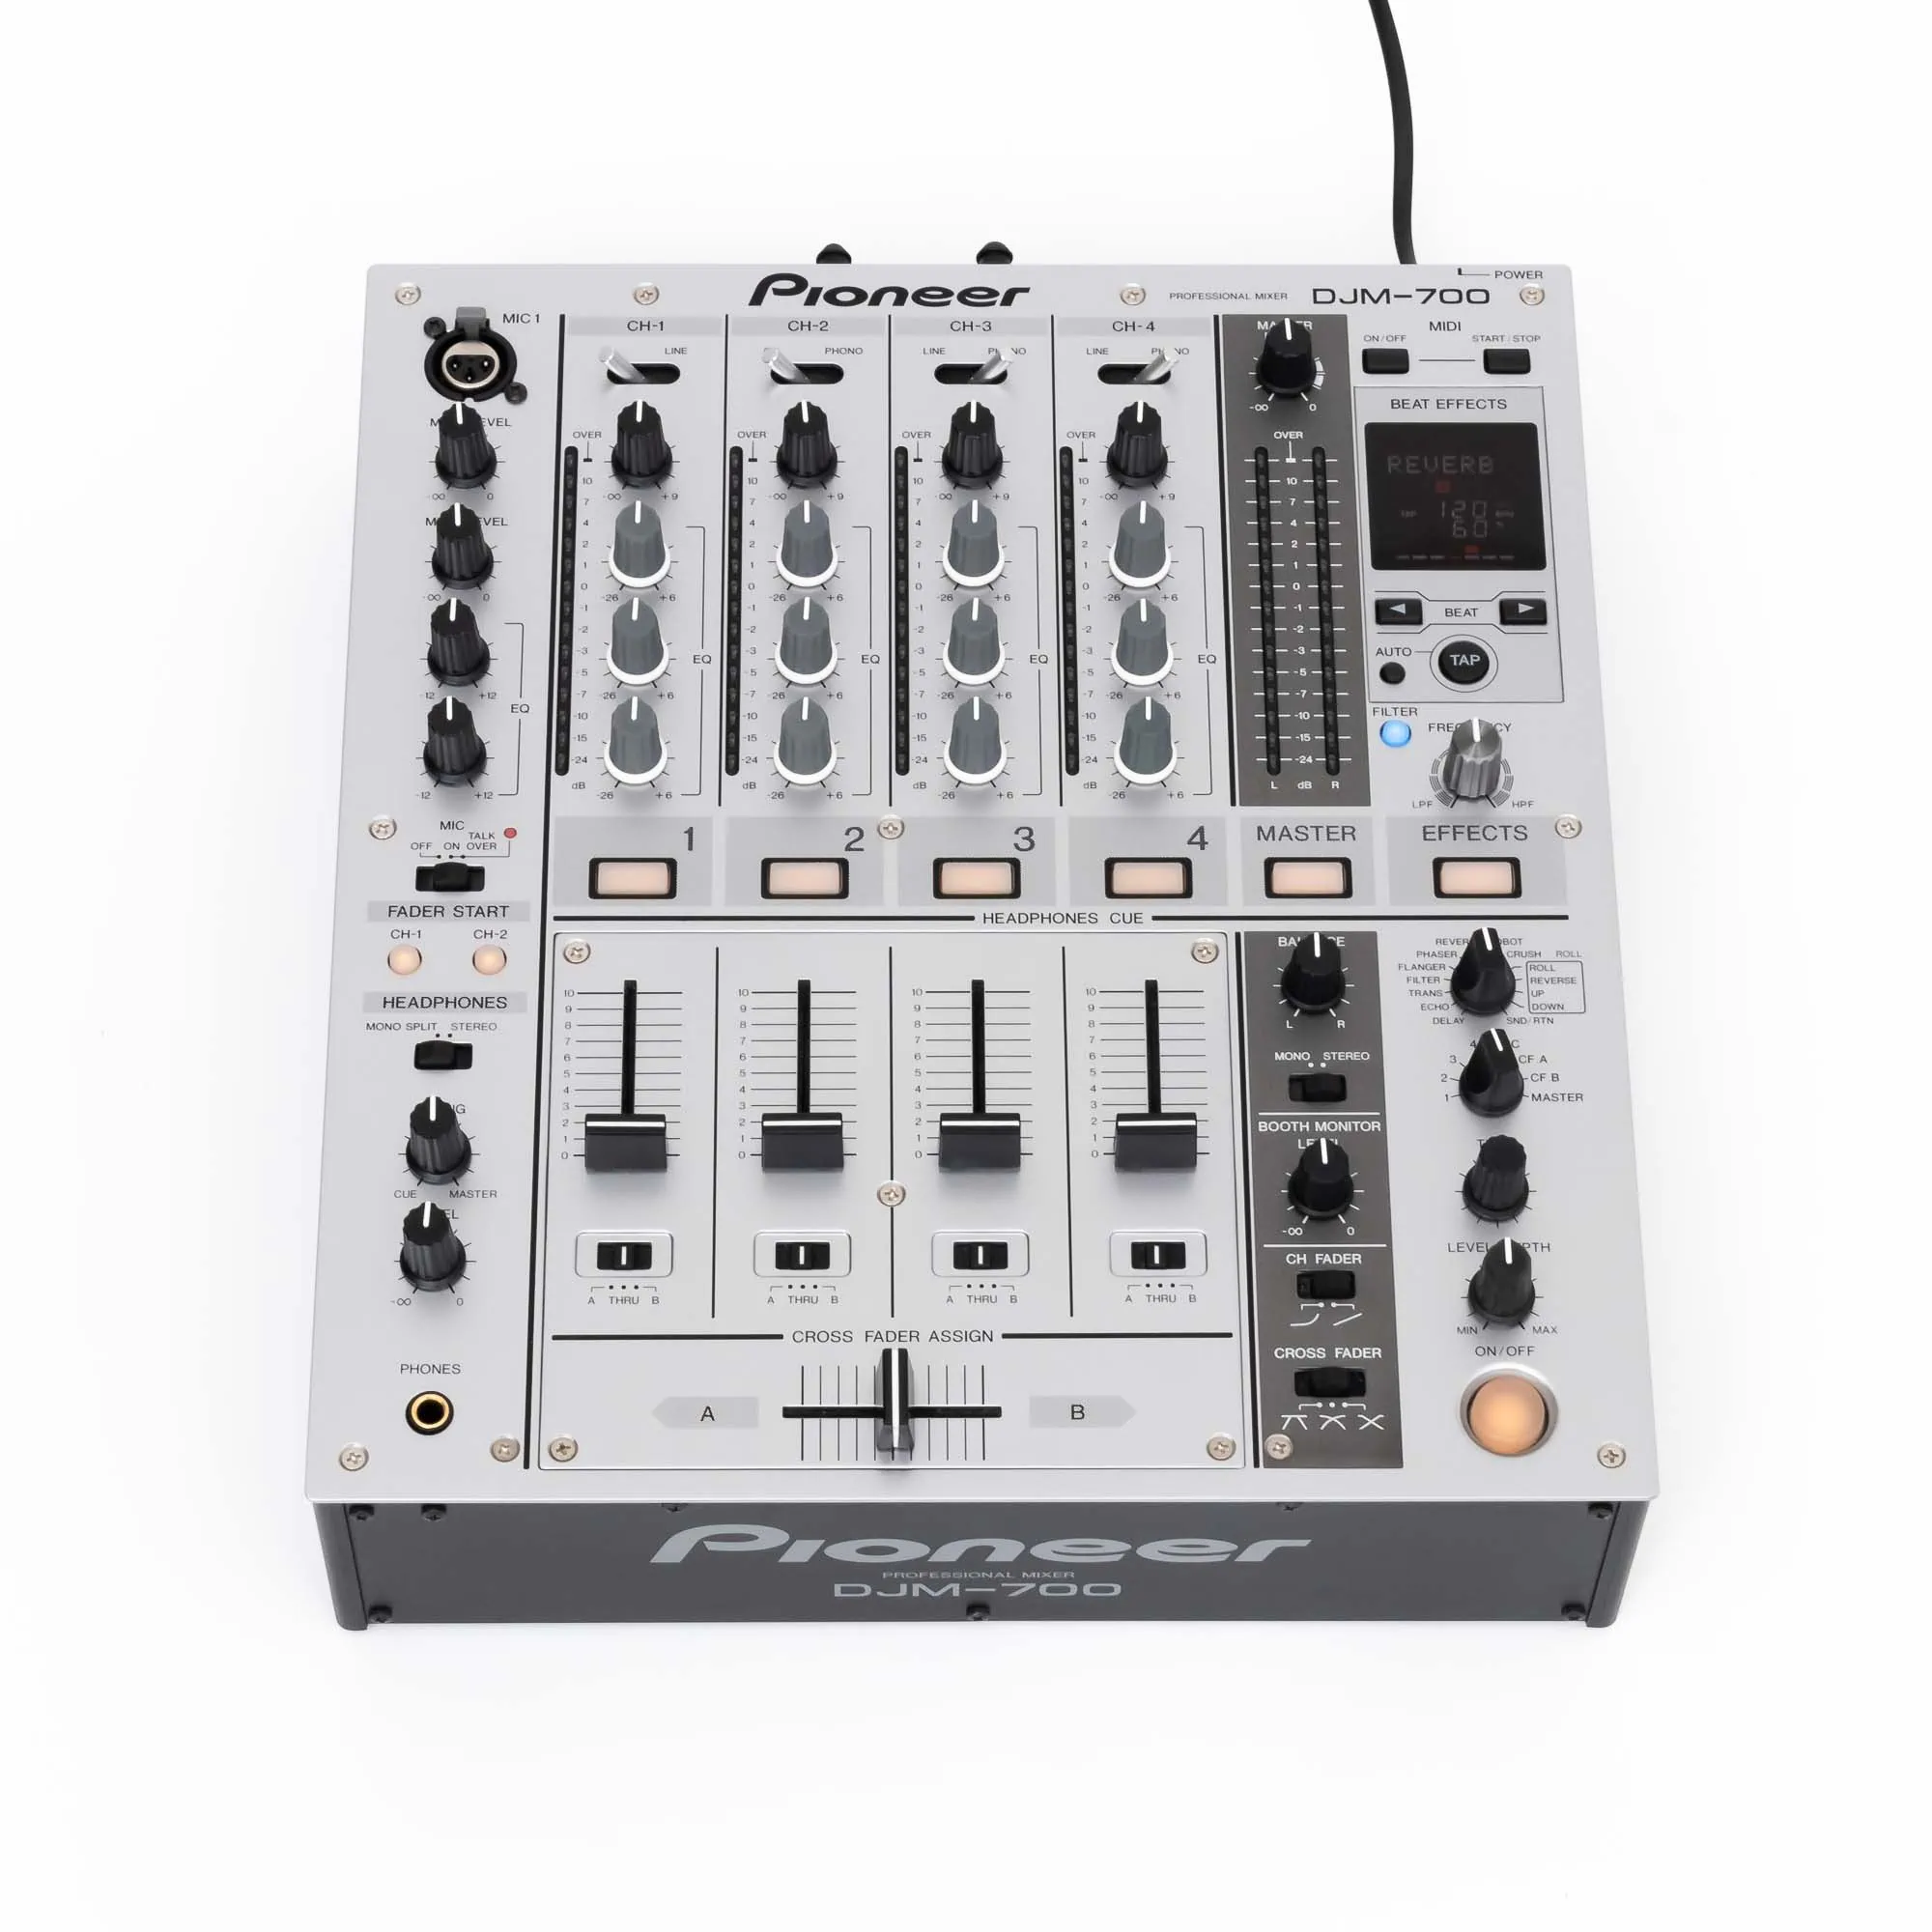 Pioneer DJ DJM 700 S gebraucht 3